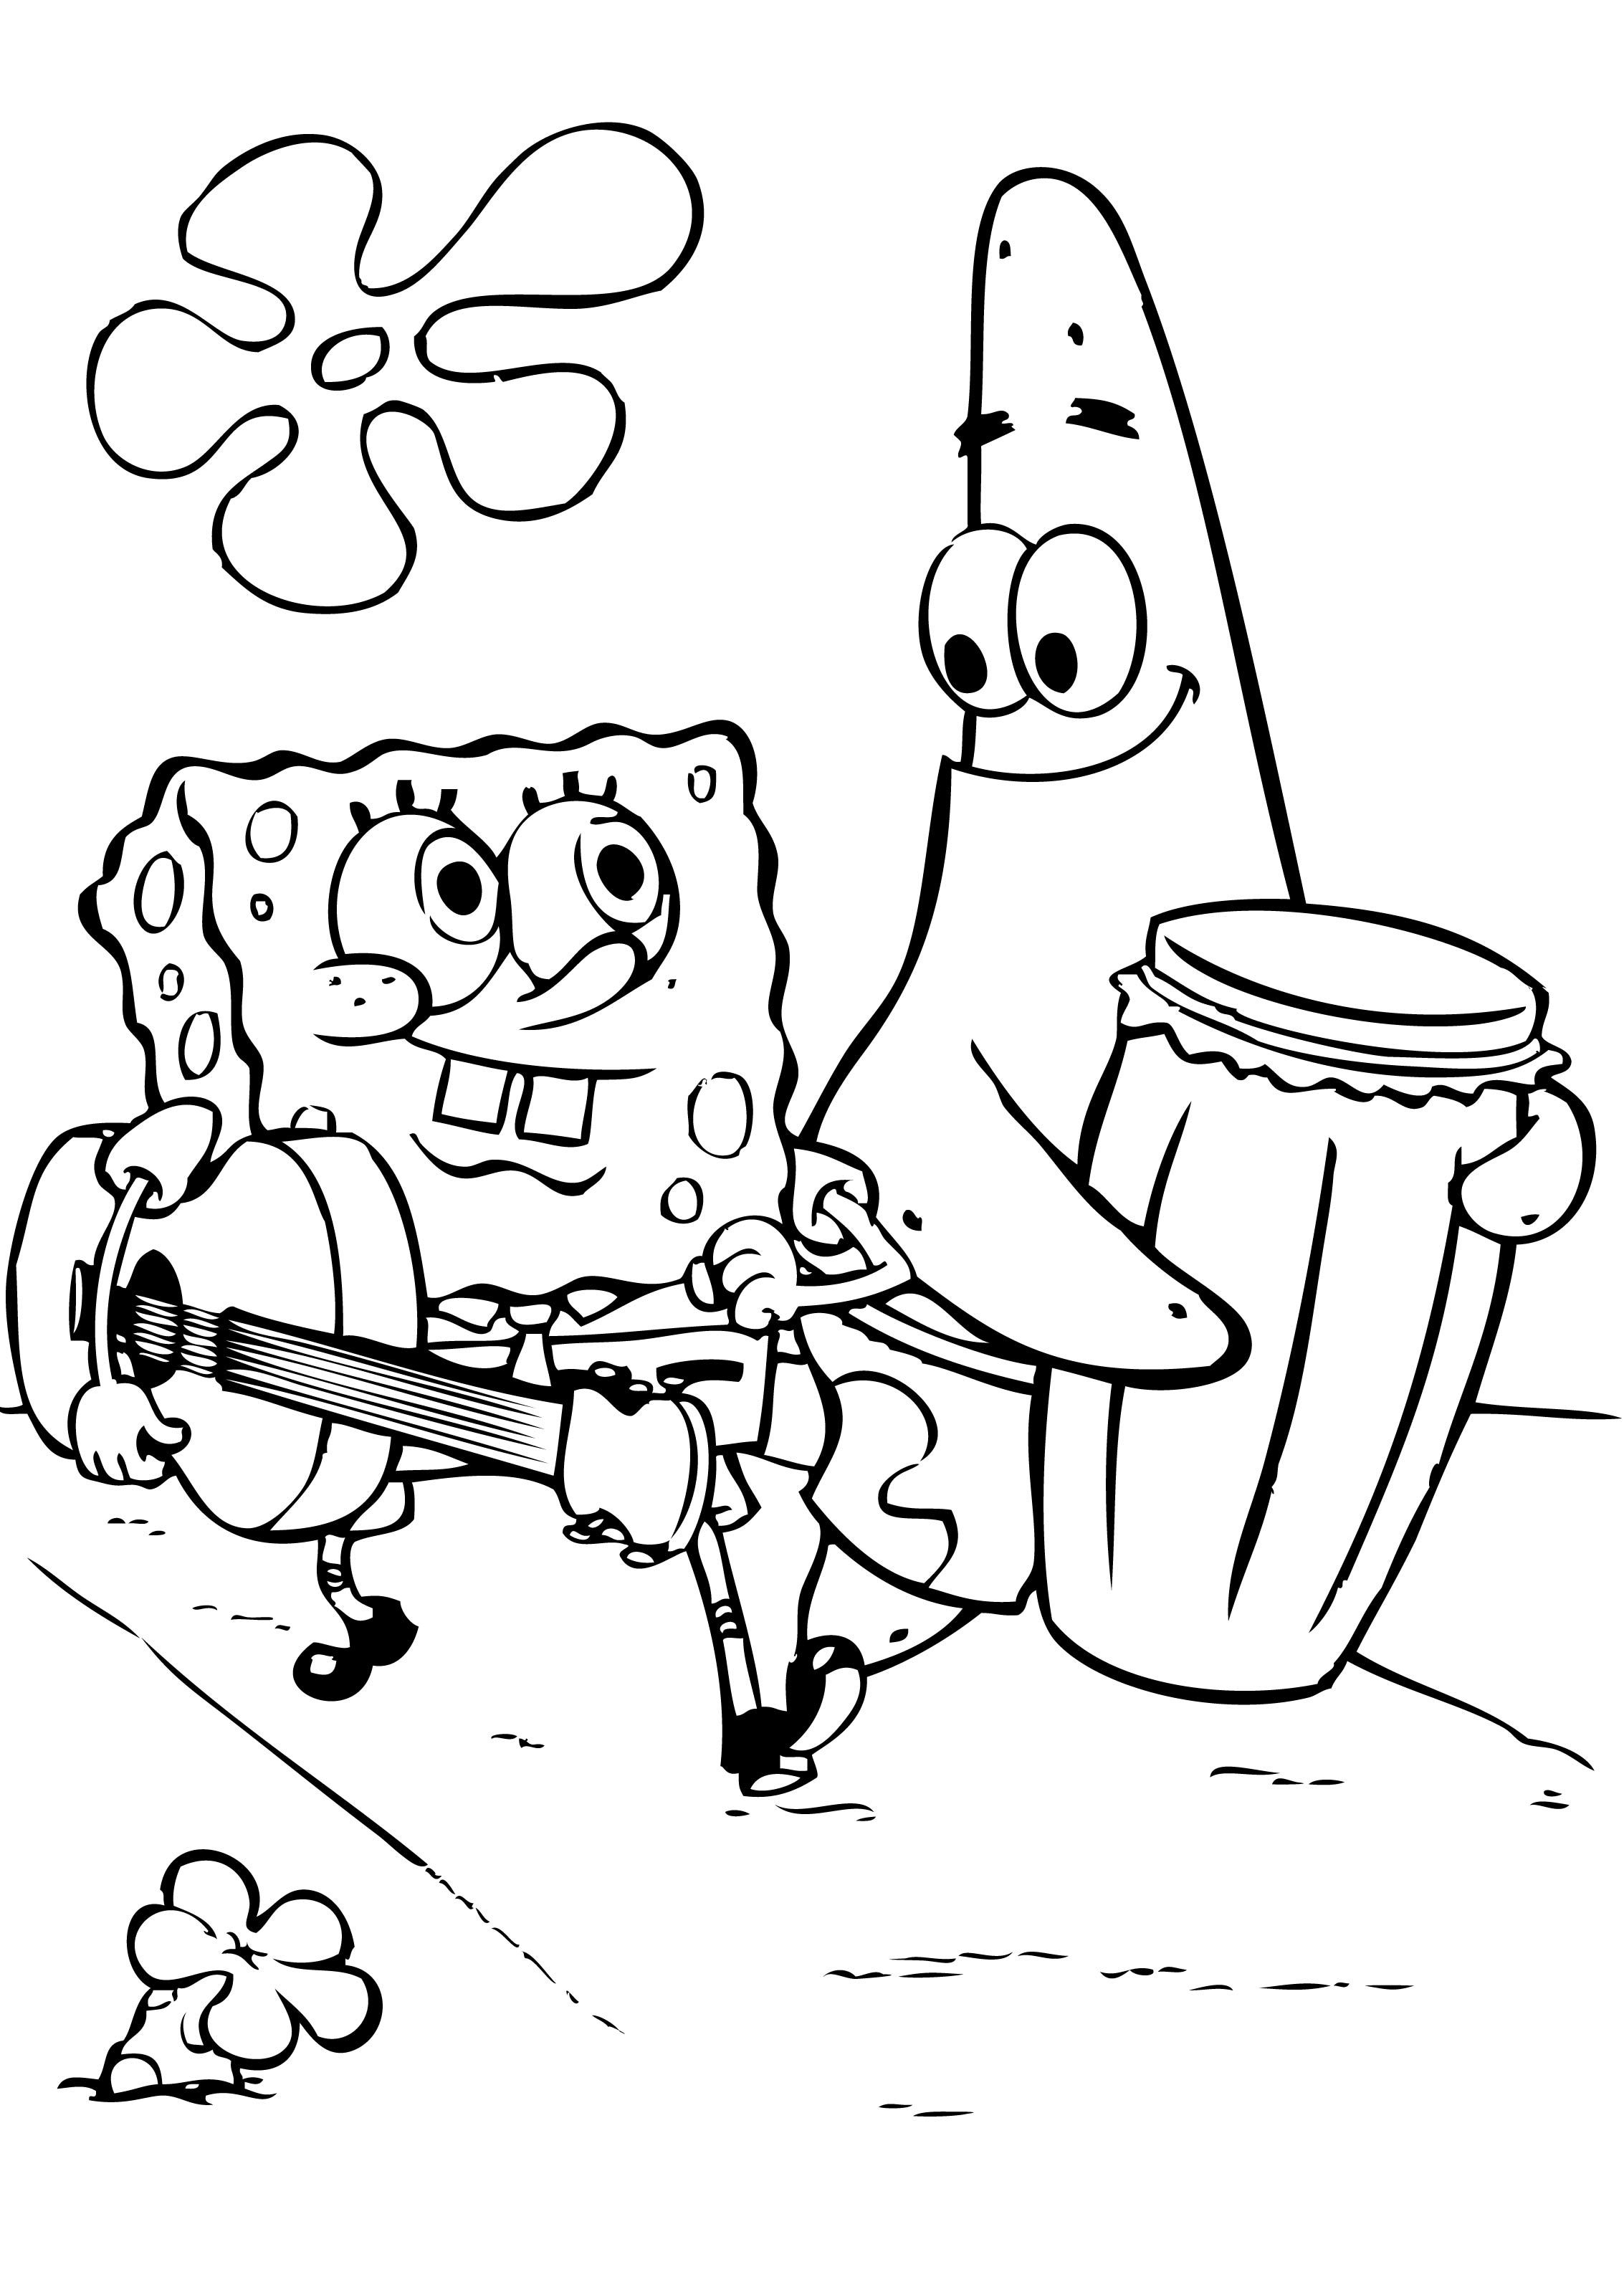 Spongebob And Patricks Play Music Coloring Page